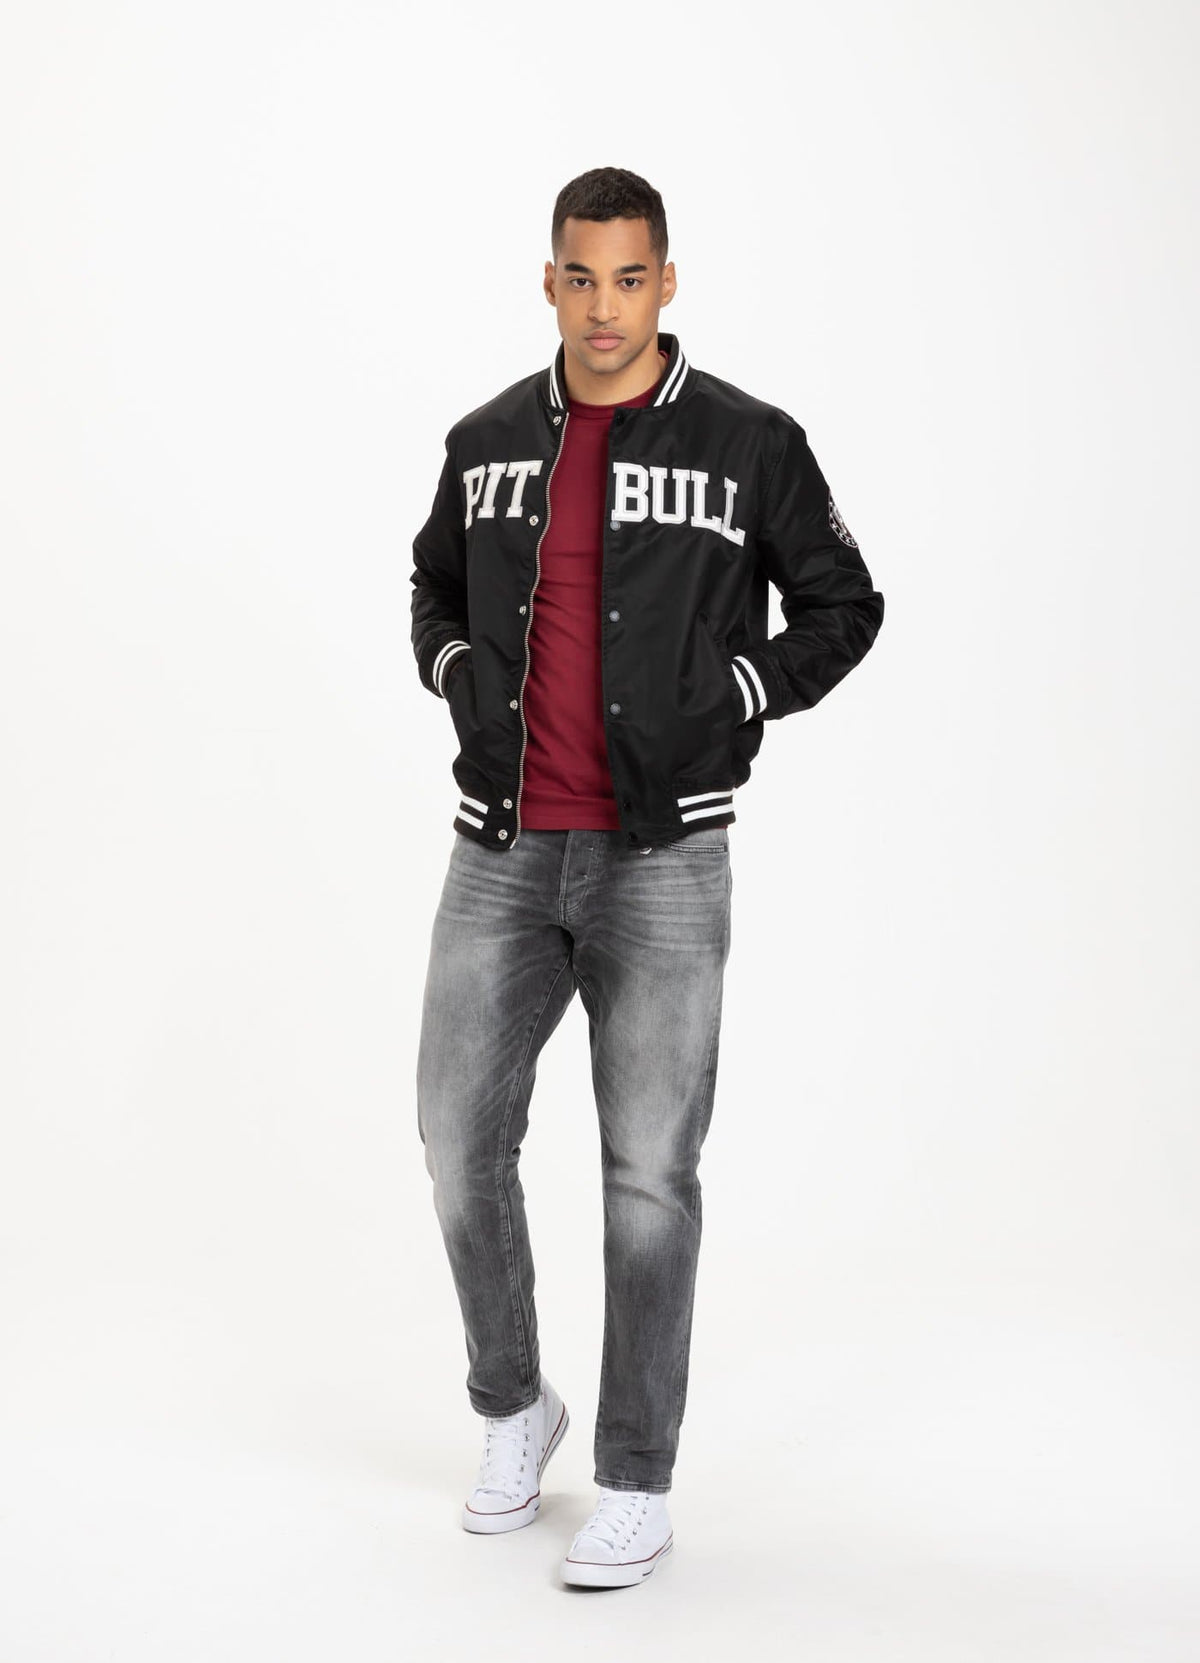 Jacket TYRIAN Black - Pitbull West Coast International Store 